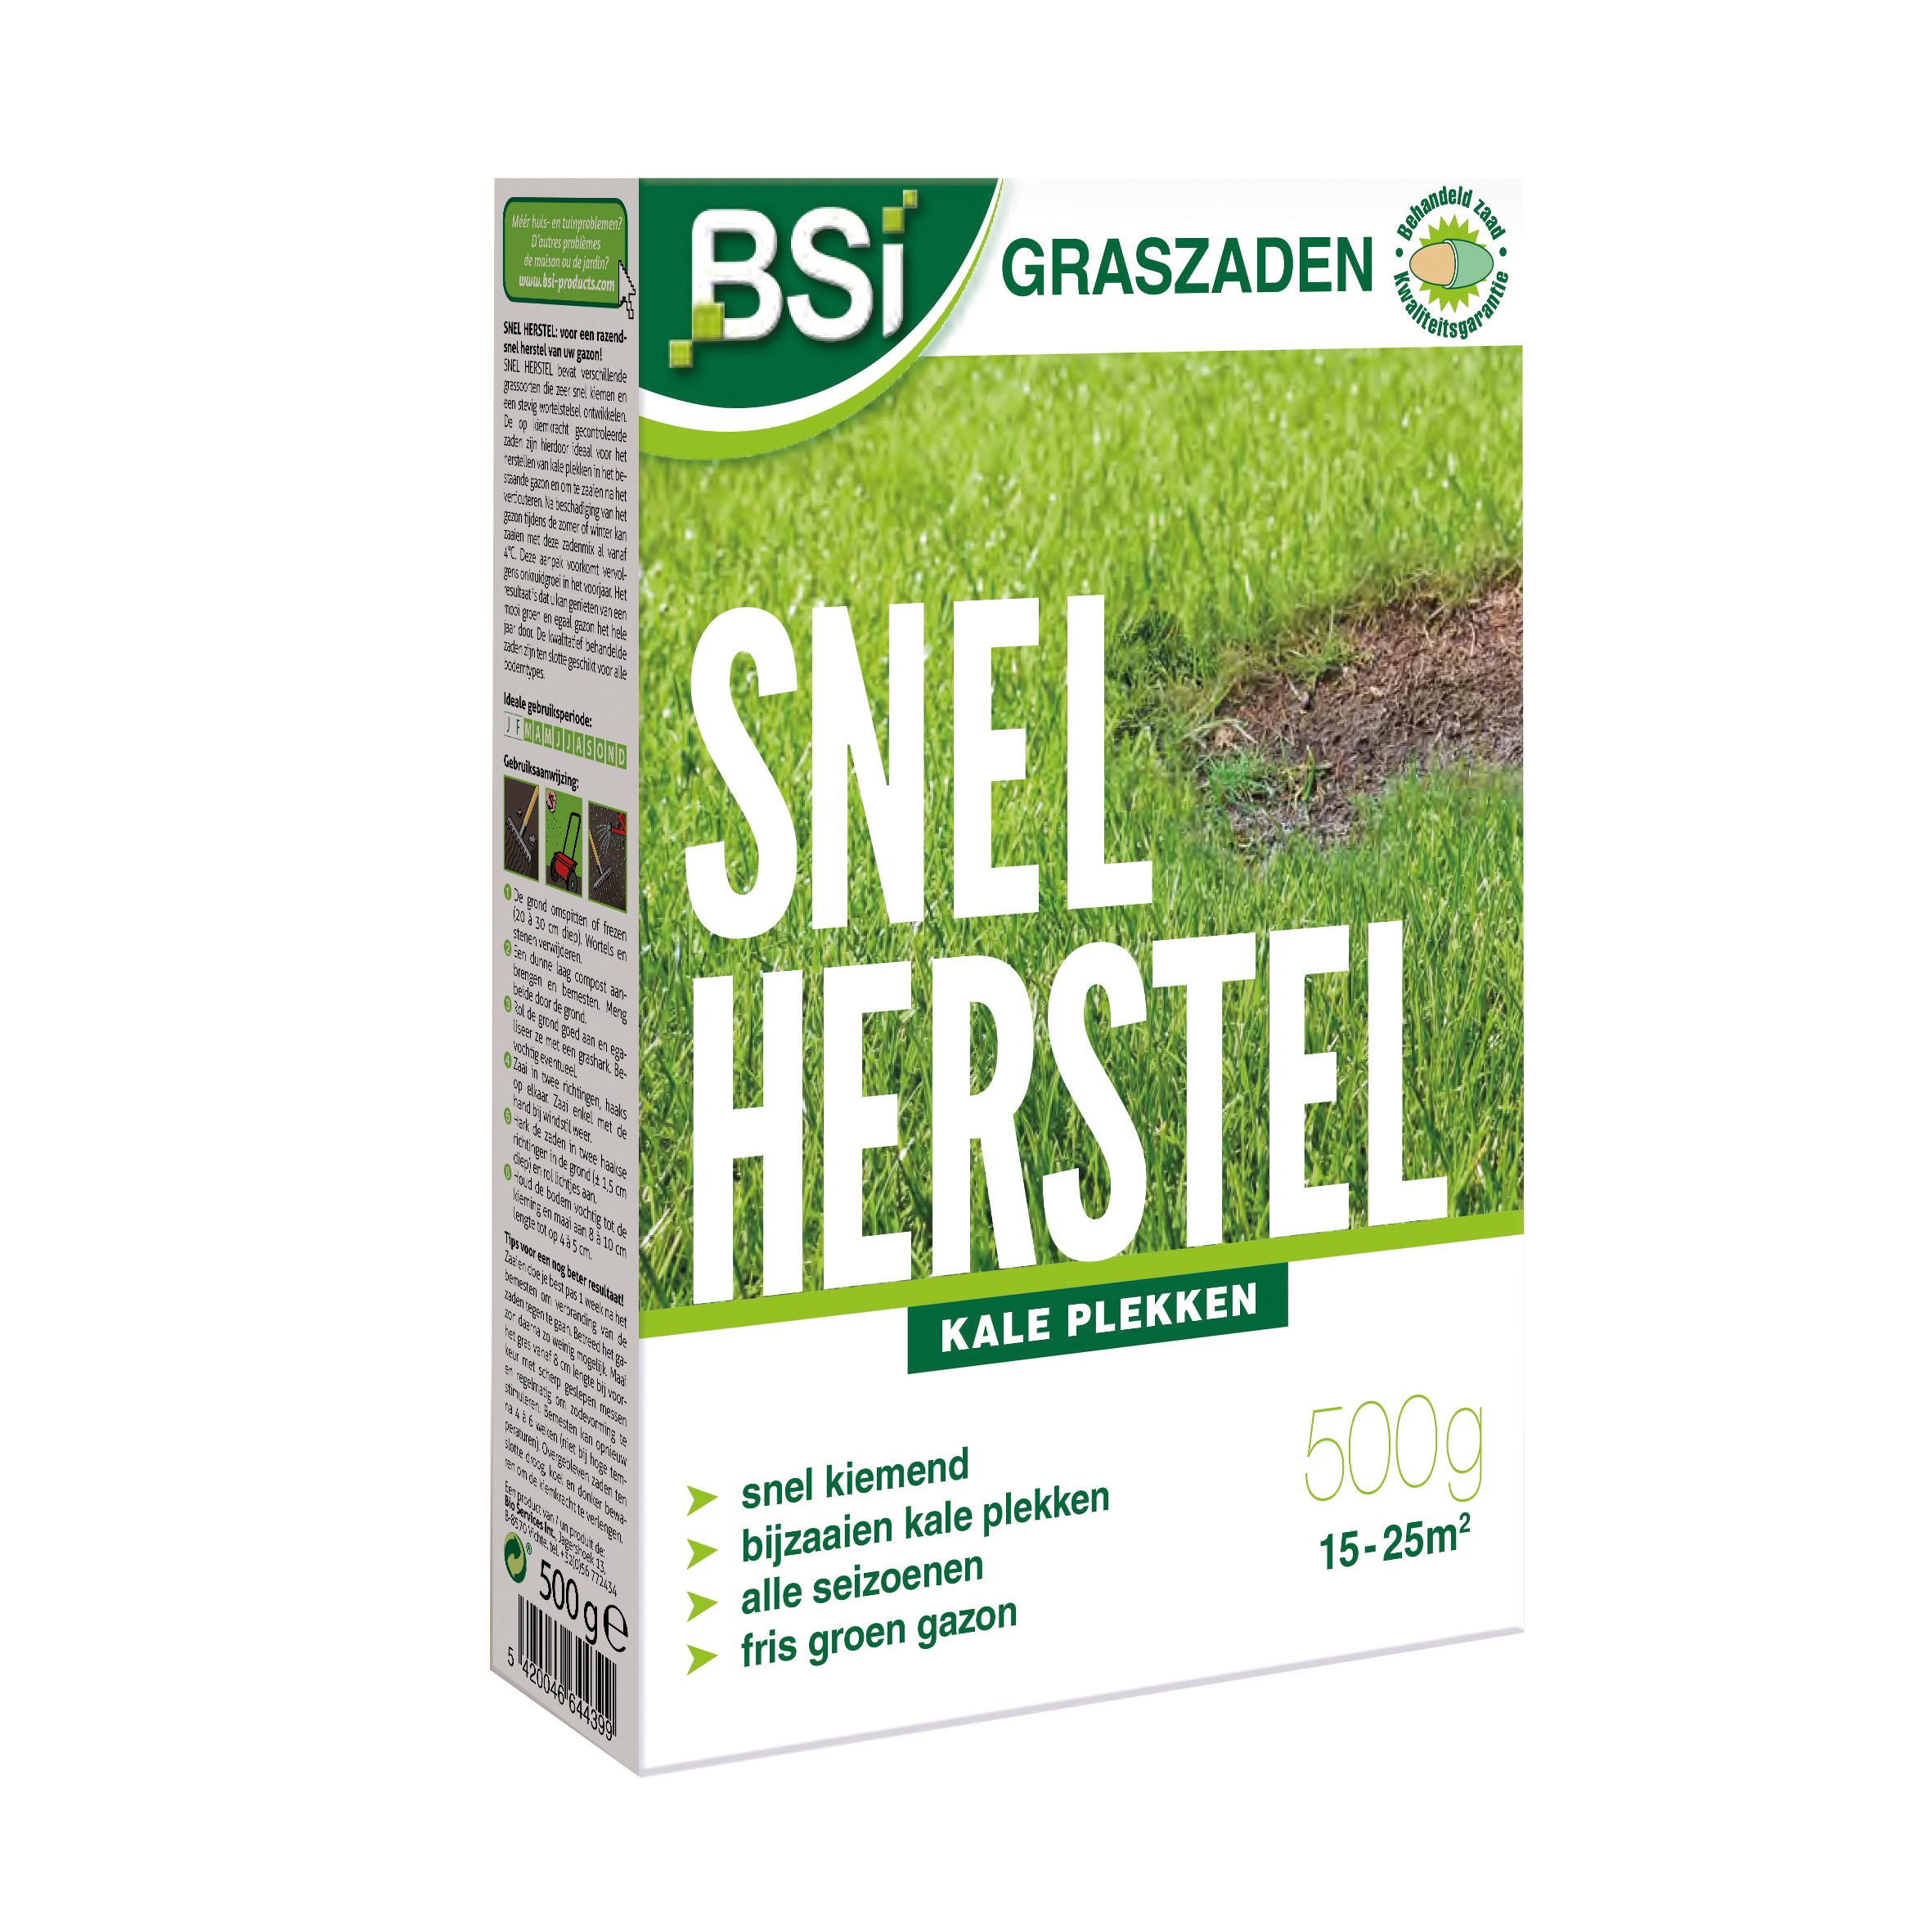 BSI Graszaad Herstel 500 g image